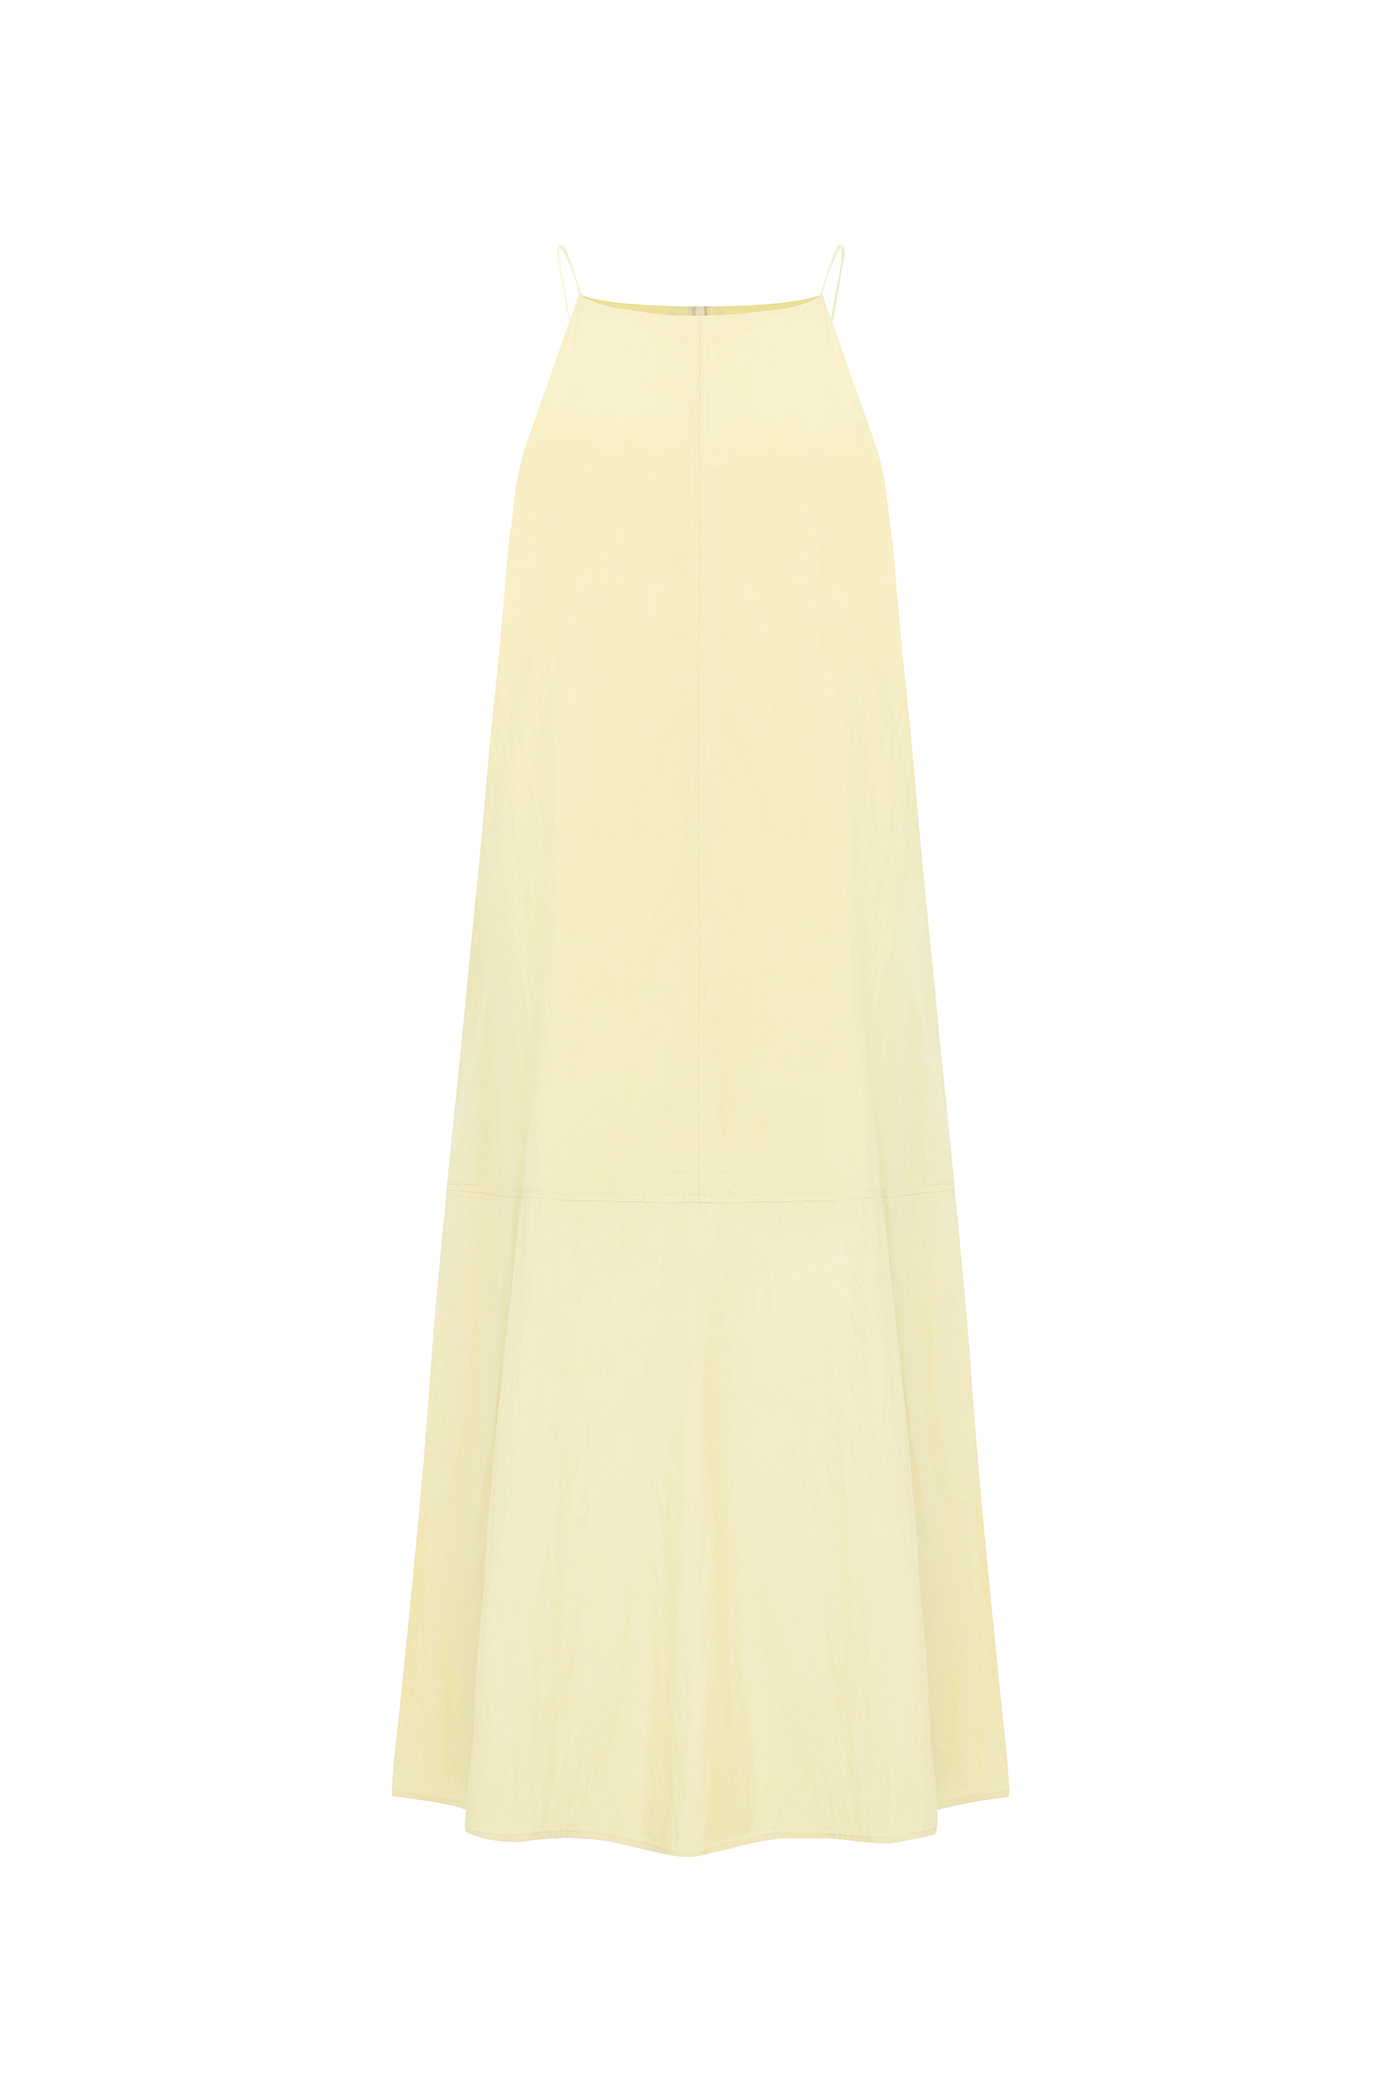 Halter Neck Sleeveless Dress[LMBCSUDR801]-2color